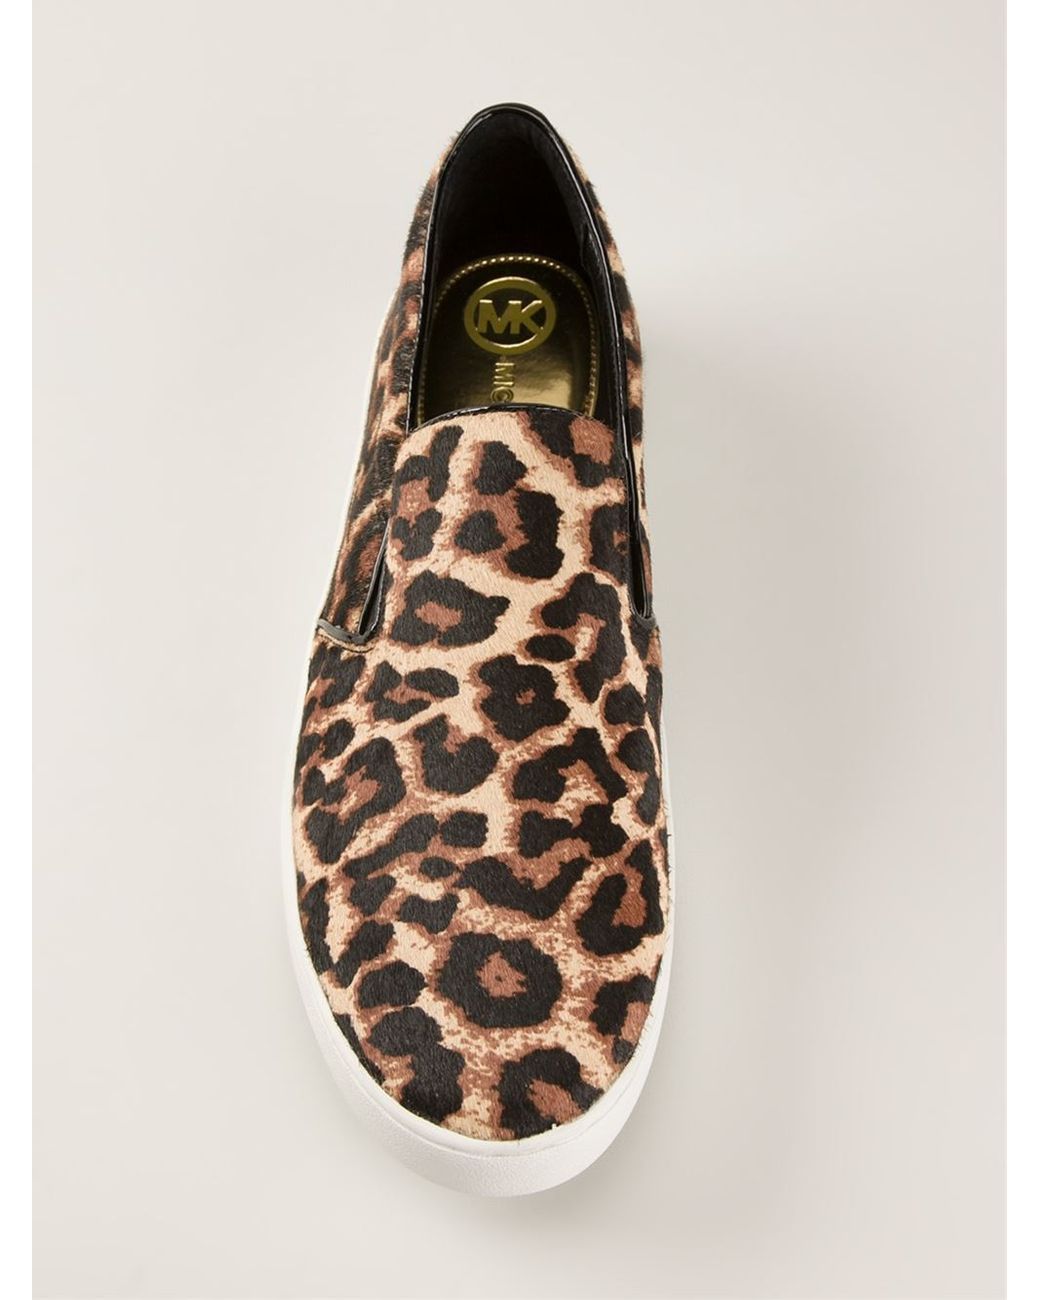 Michael Kors Leopard Athletic Shoes for Women for sale  eBay